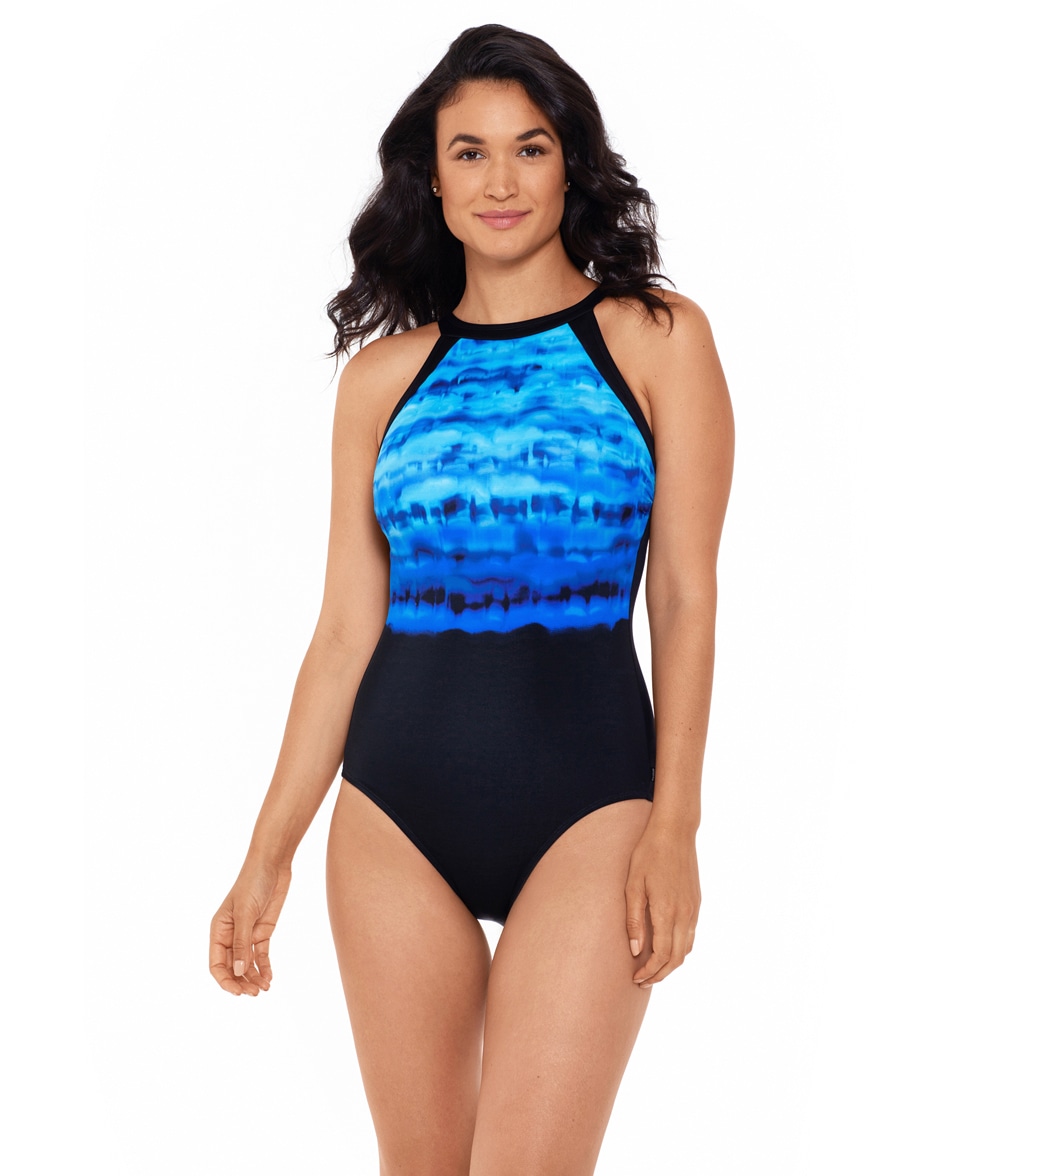 Reebok Women's Conceptual Waters High Neck Chlorine Resistant One Piece Swimsuit - Blue/Black 10 - Swimoutlet.com